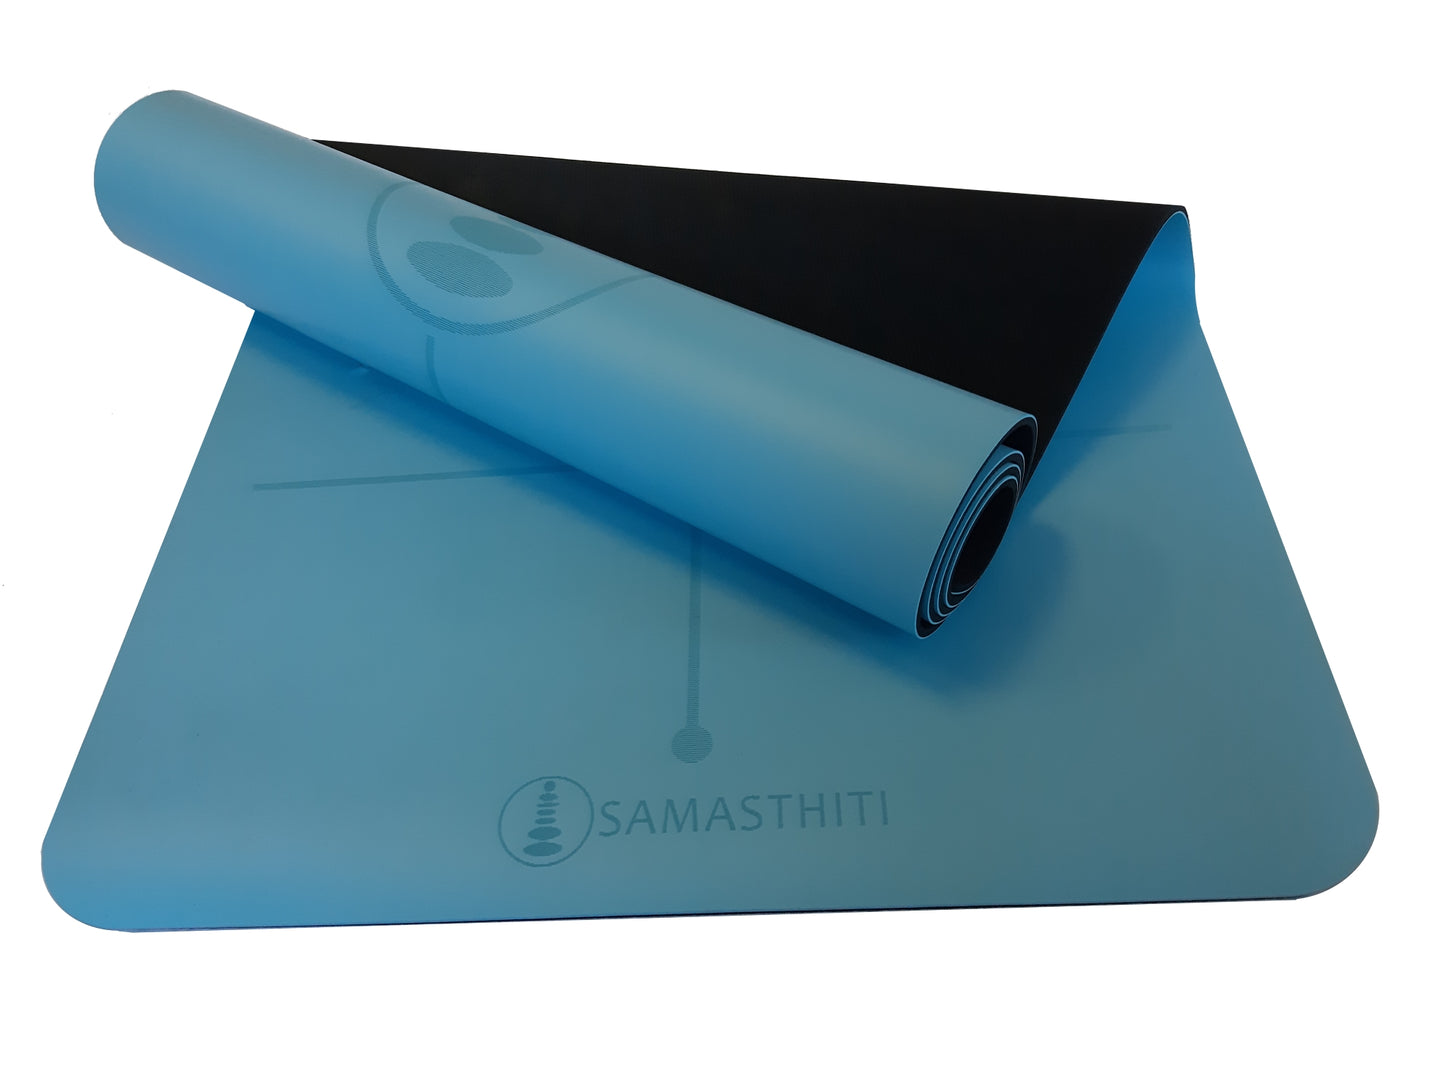 Samasthiti Premium Rubber yoga mat and Mandala bag bundle